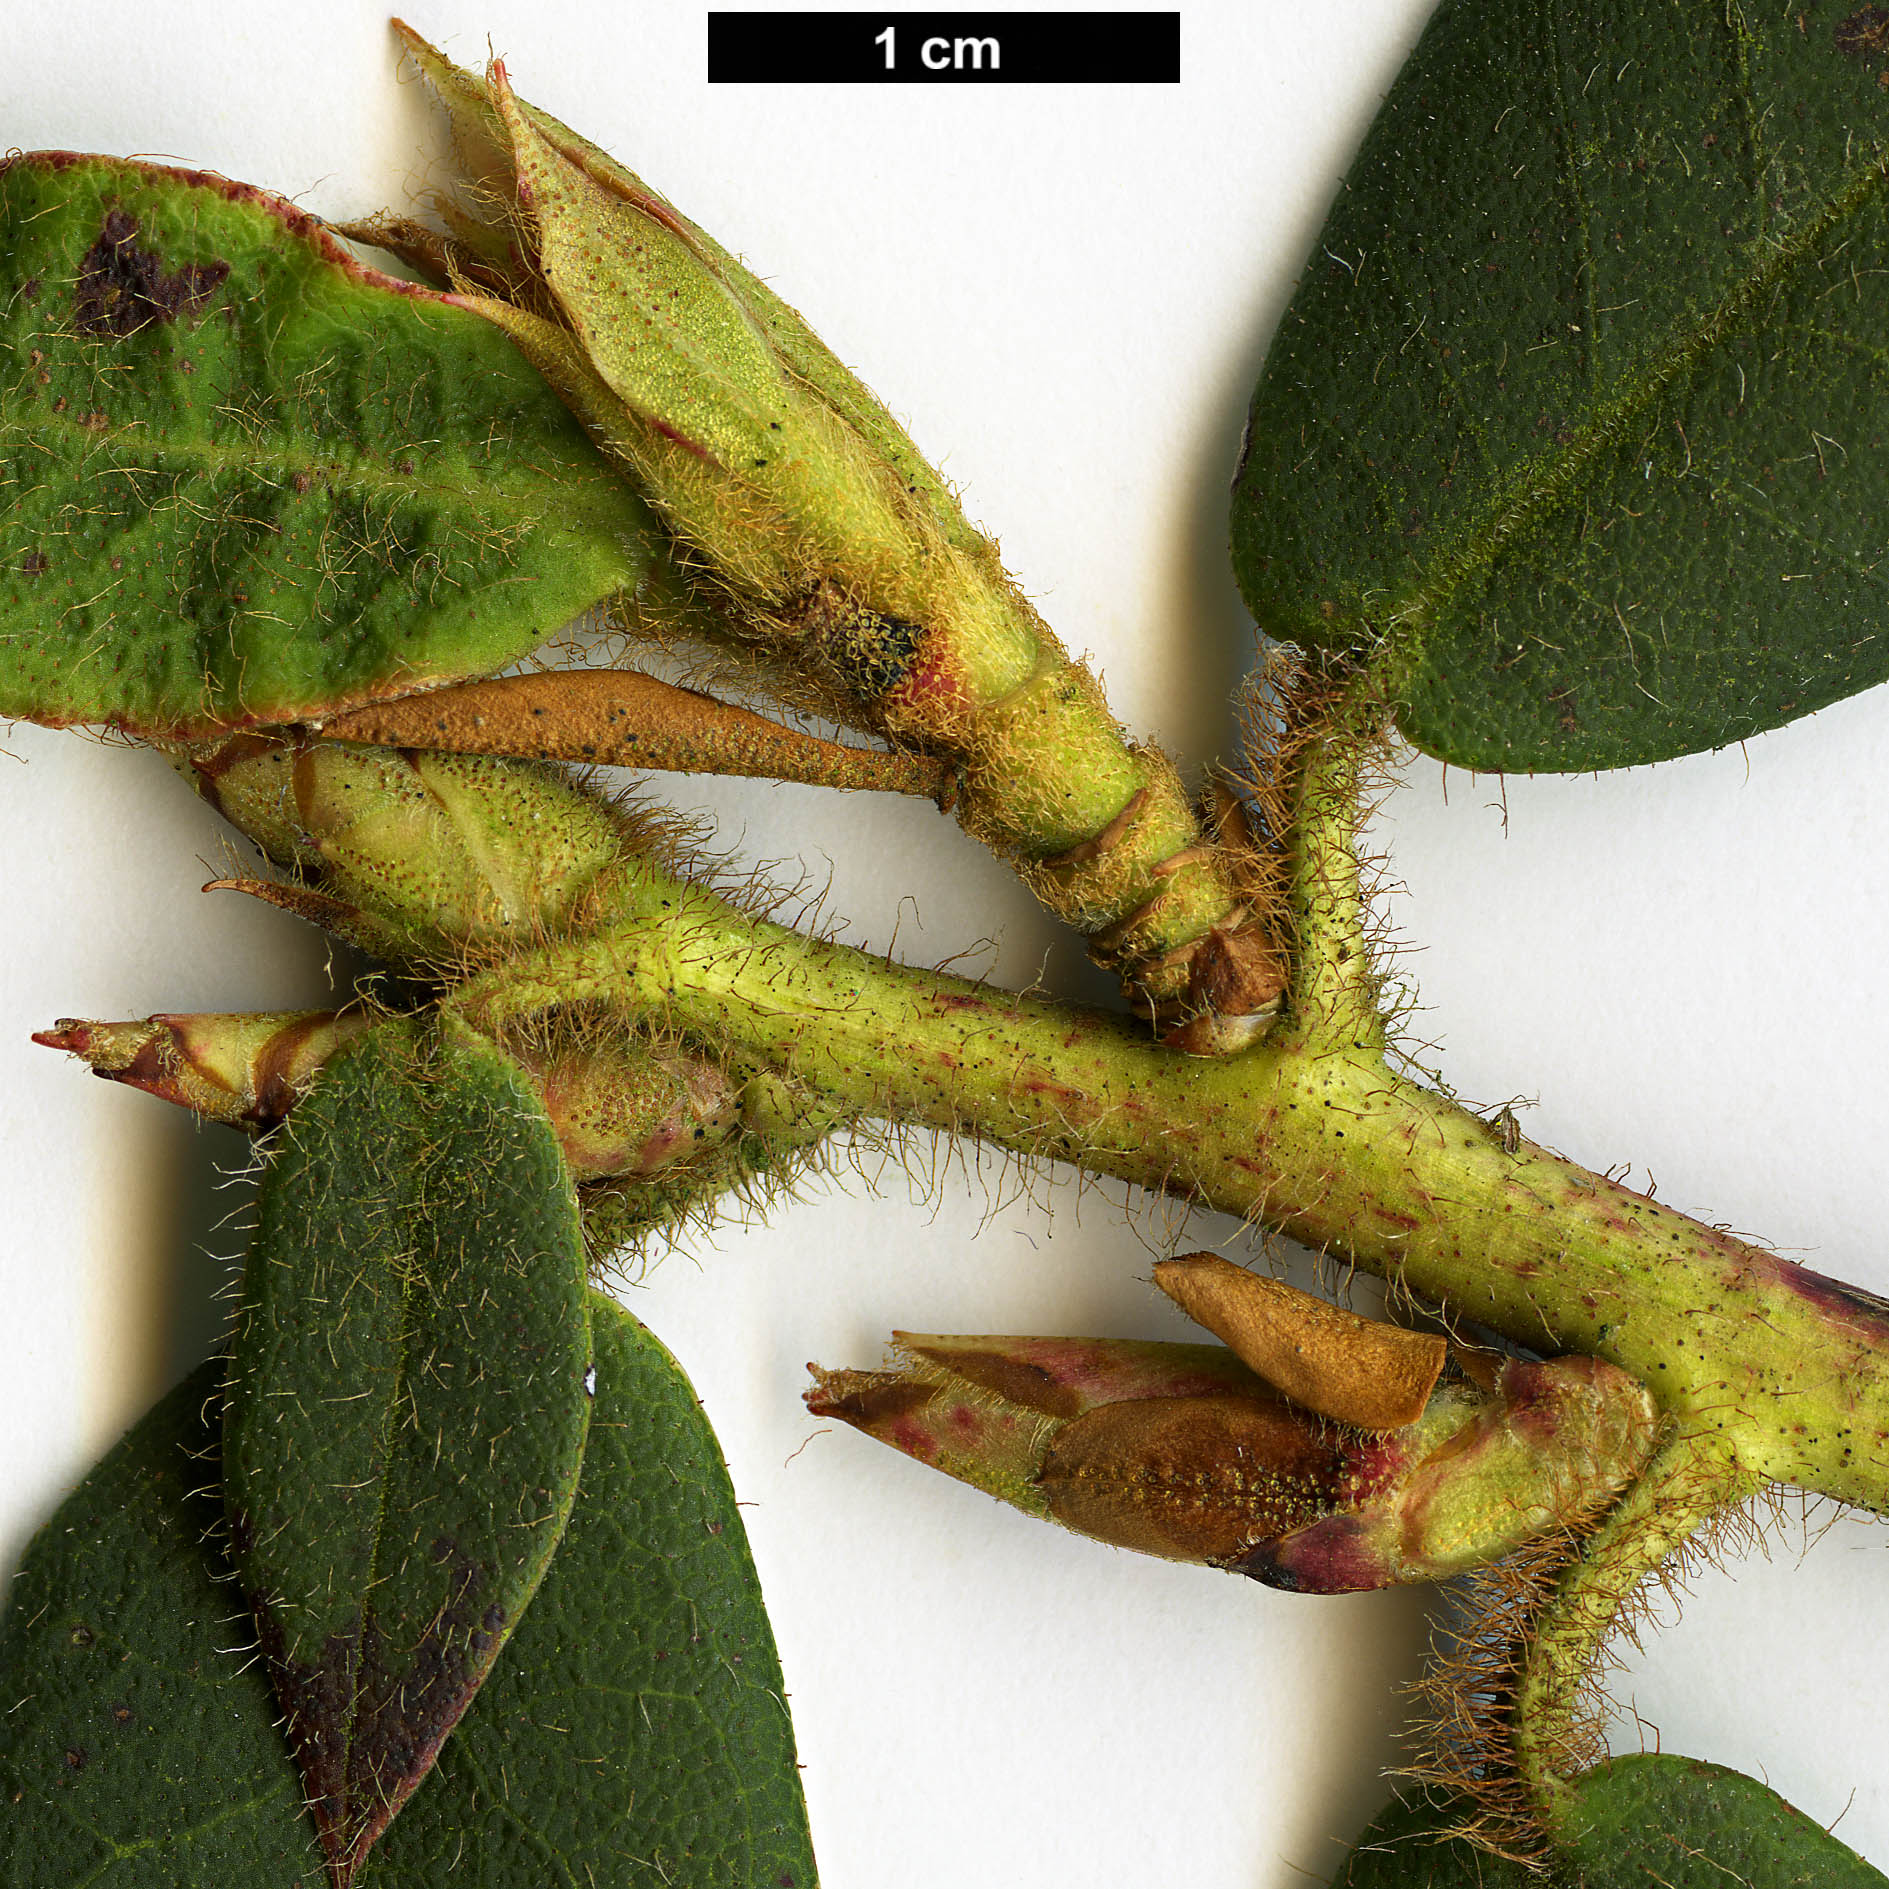 High resolution image: Family: Ericaceae - Genus: Rhododendron - Taxon: trichanthum